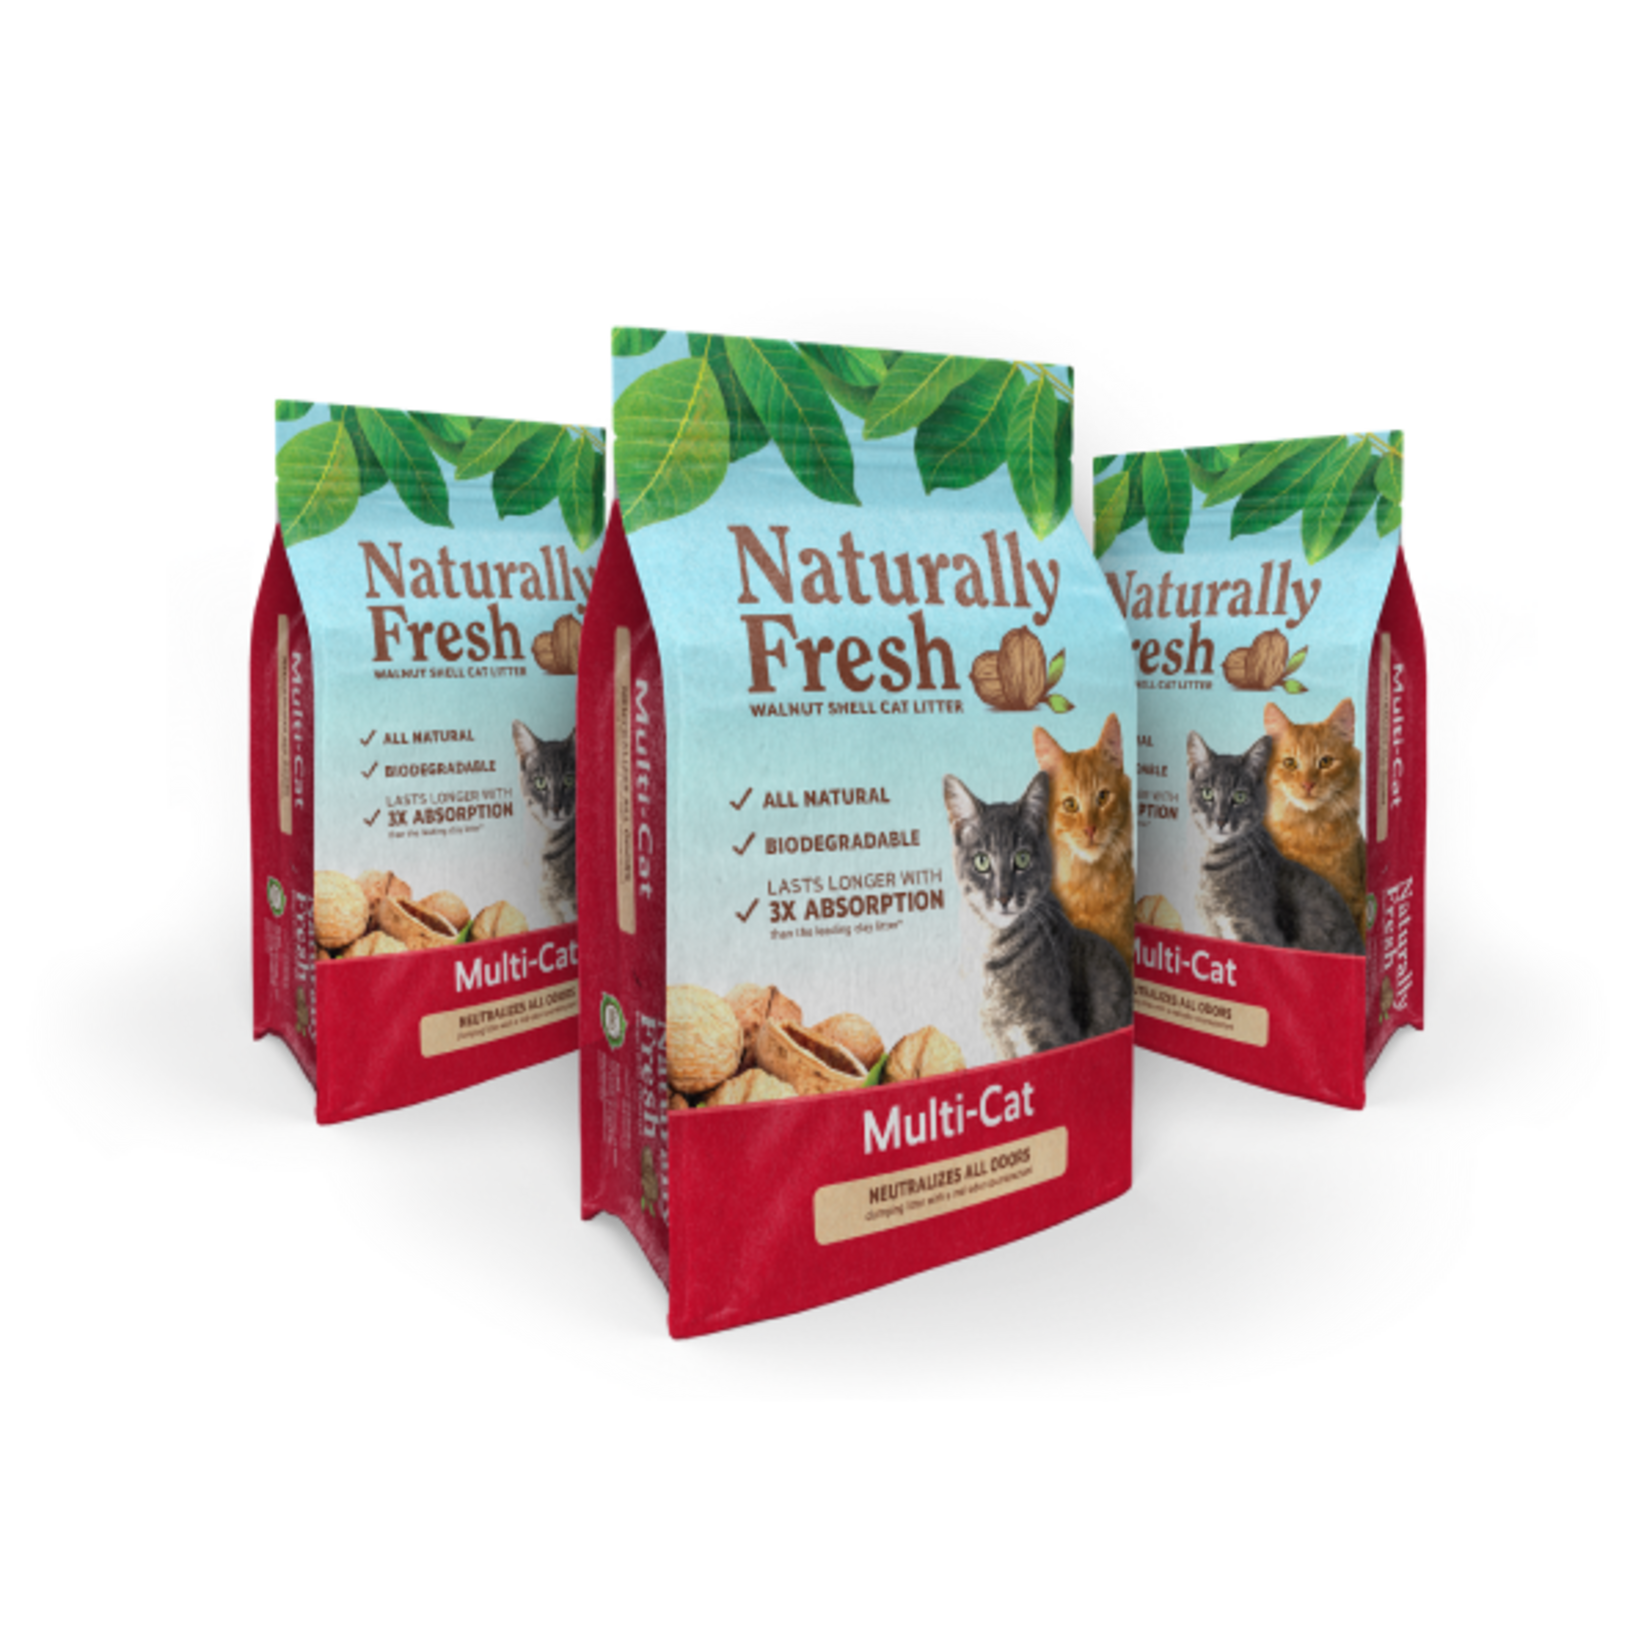 Eco-Shell Naturally Fresh Walnut Based Multi Cat Clumping Litter